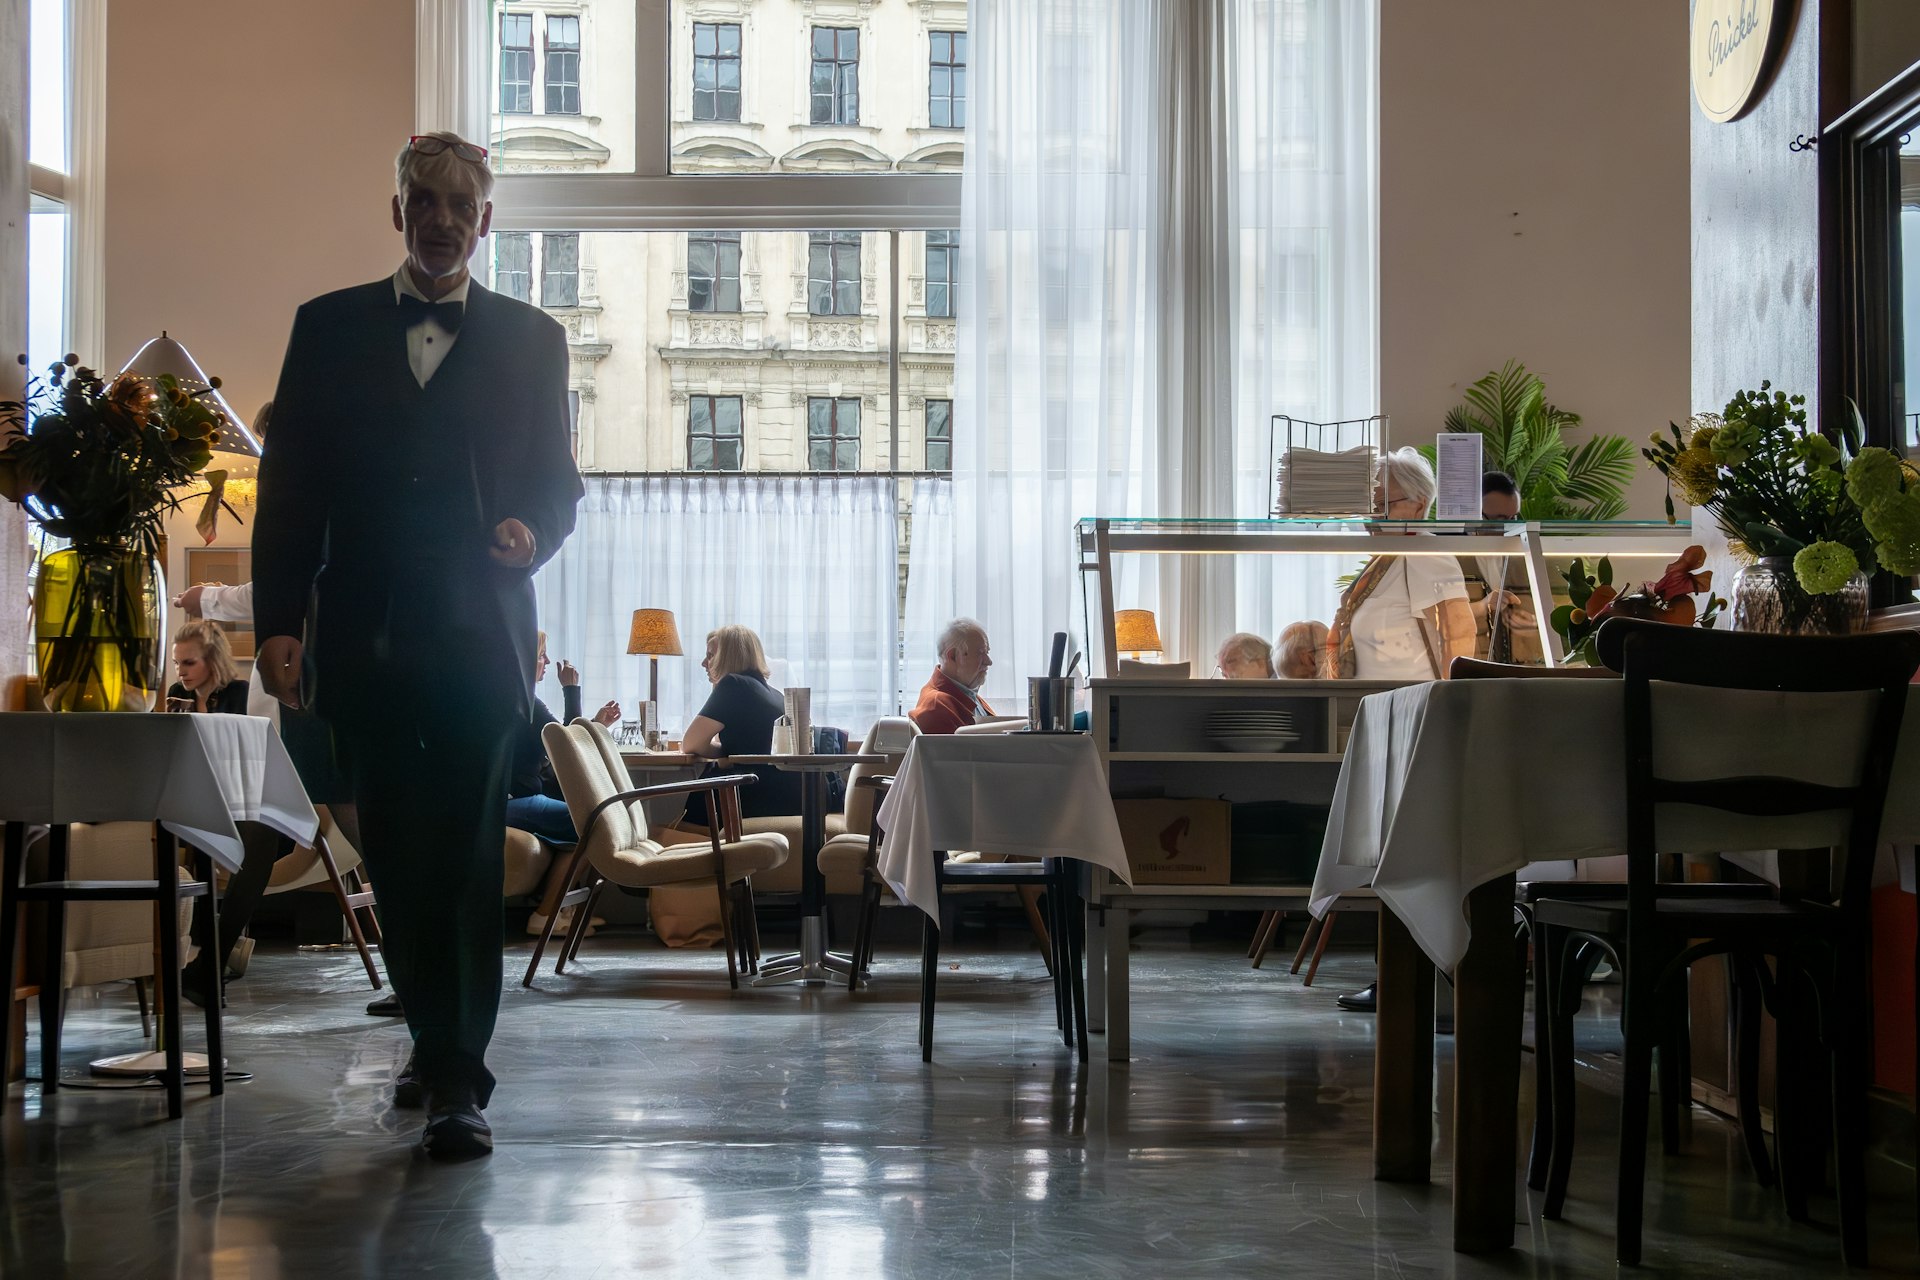  A waiter inside the landmark cafe, Café Prückel, Vienna, Austria